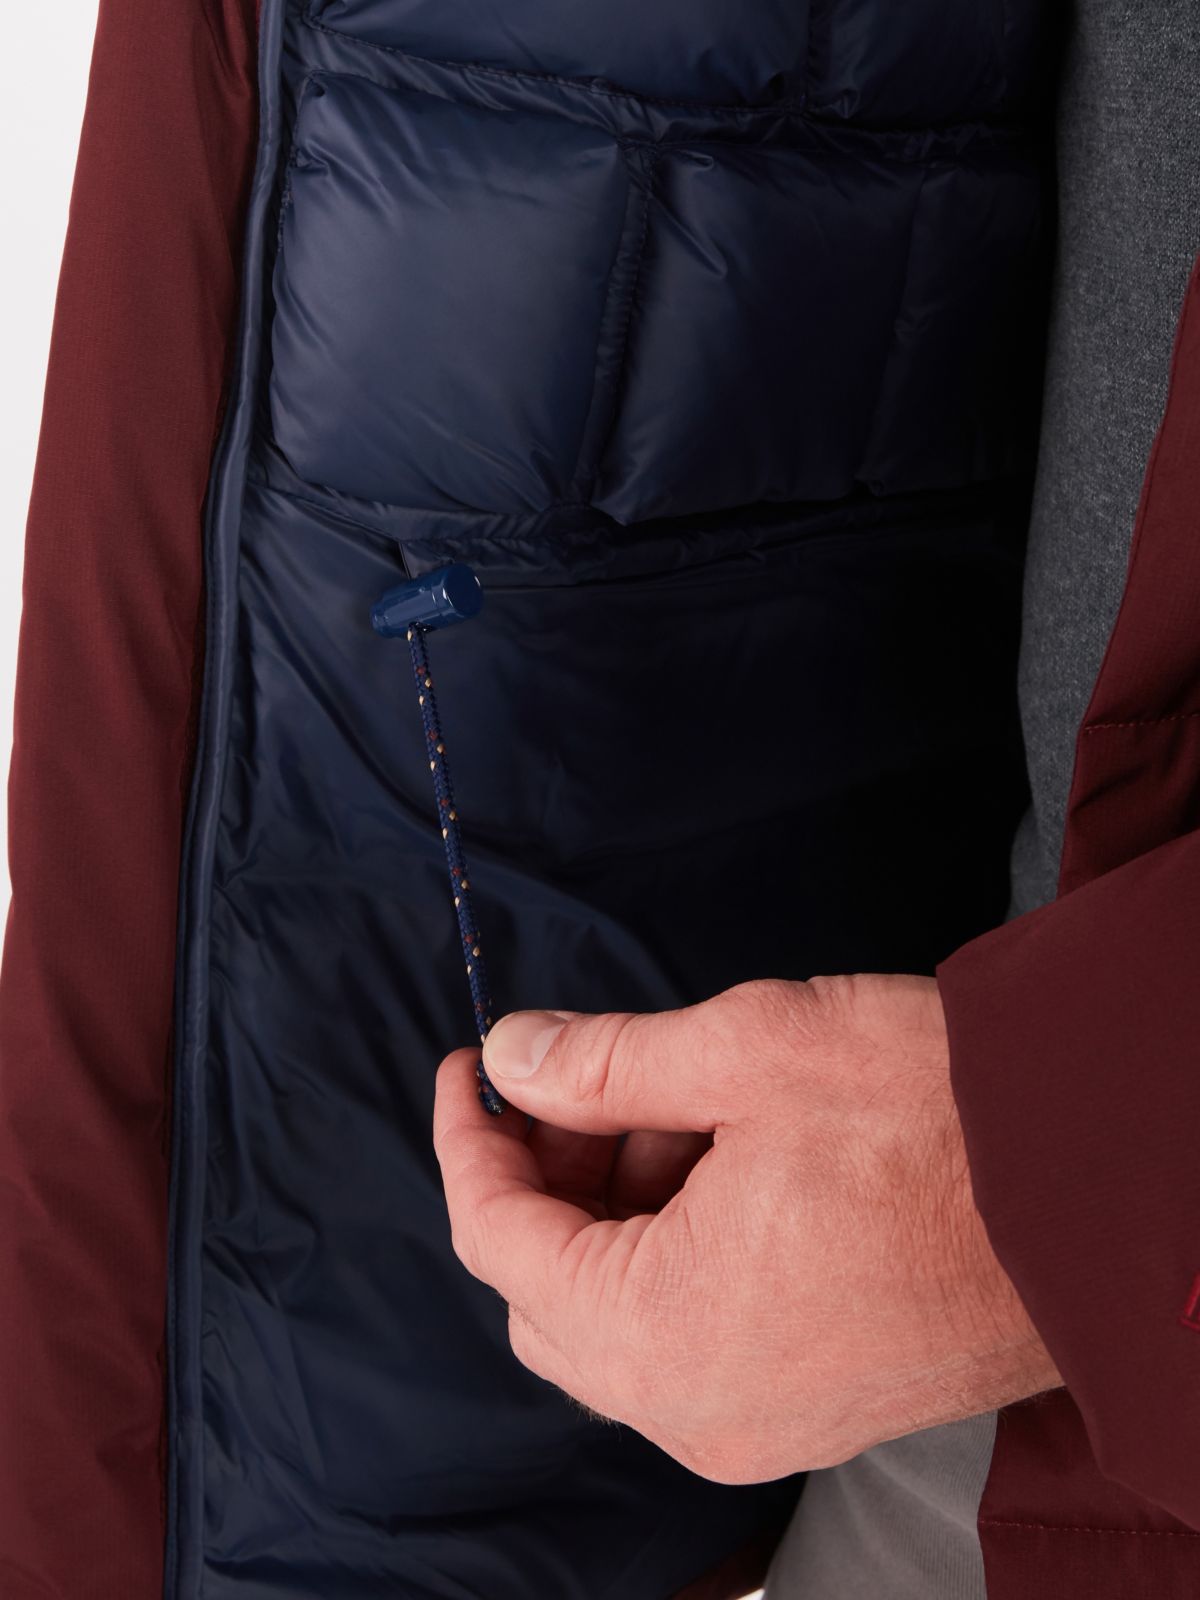 Model pulling drawstring in the interior of men's jacket